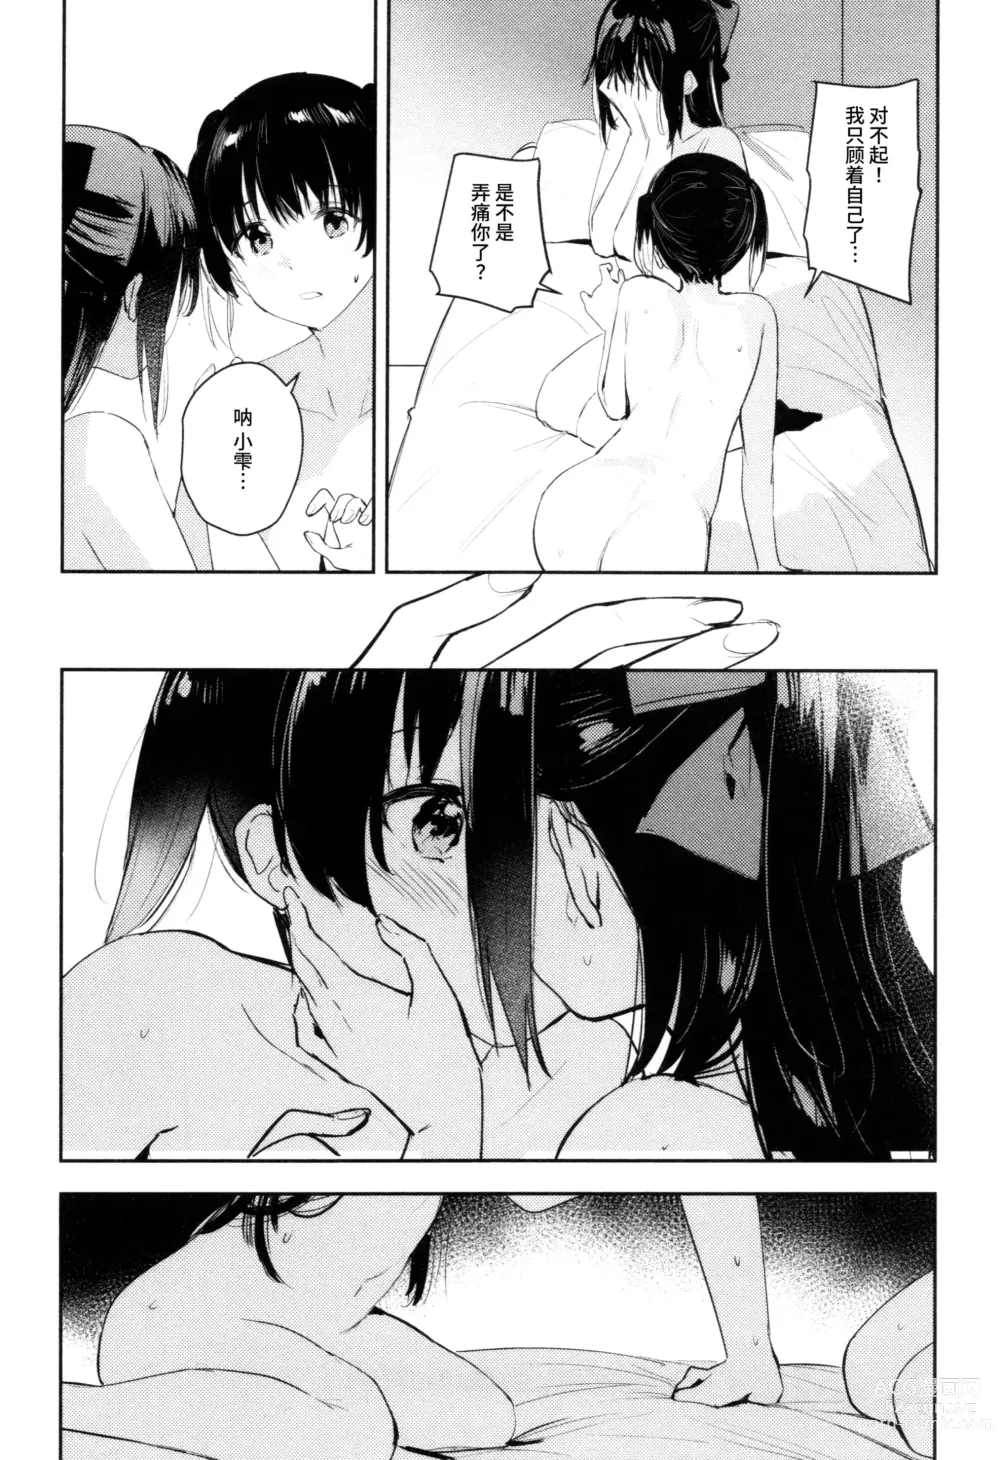 Page 21 of doujinshi 太过甜美的谢幕